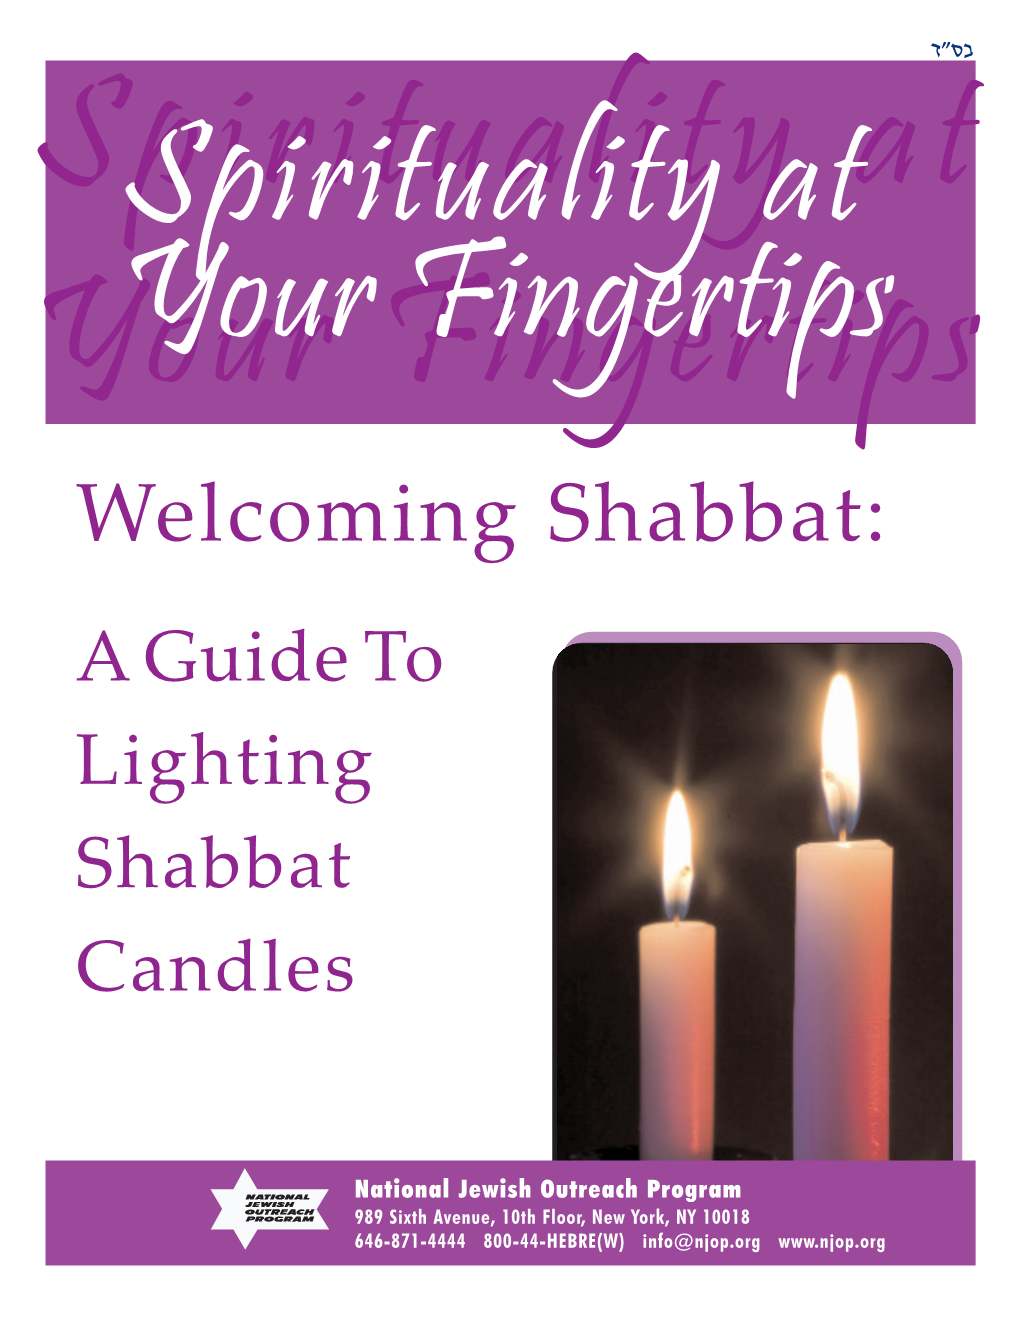 Shabbat Candle Lighting